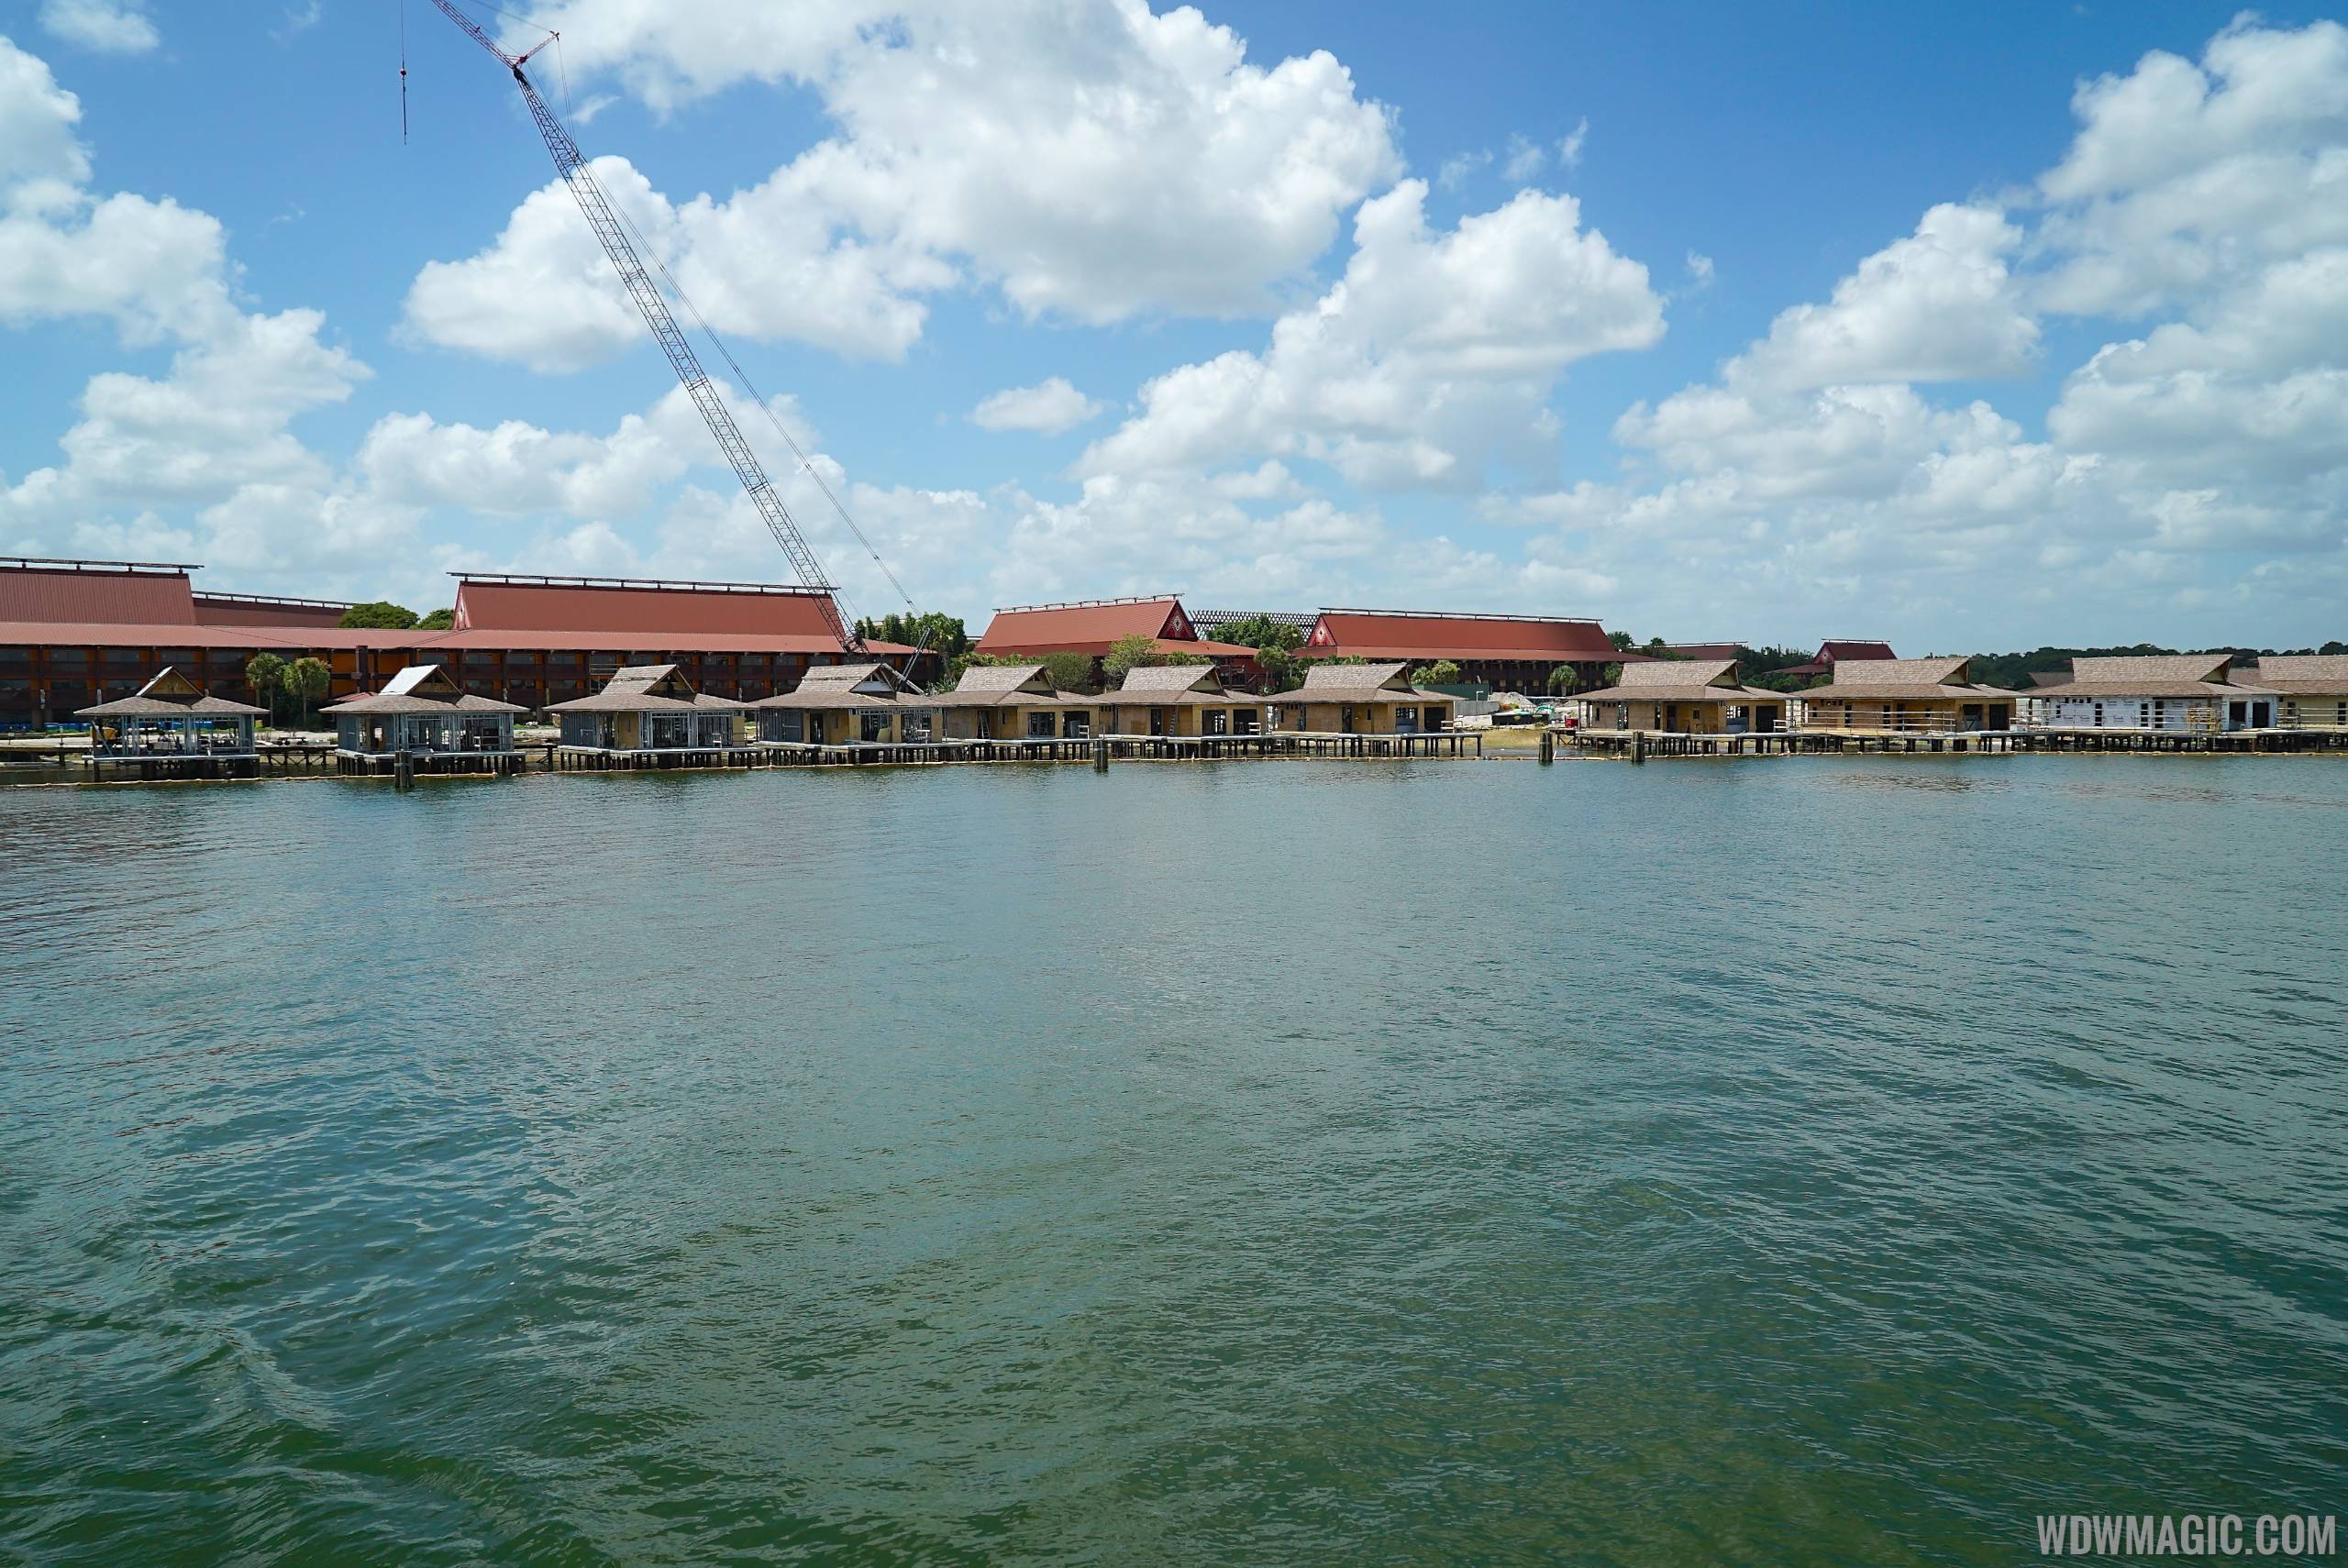 PHOTOS - Latest look at the Disney Vacation Club lagoon villas at the Polynesian